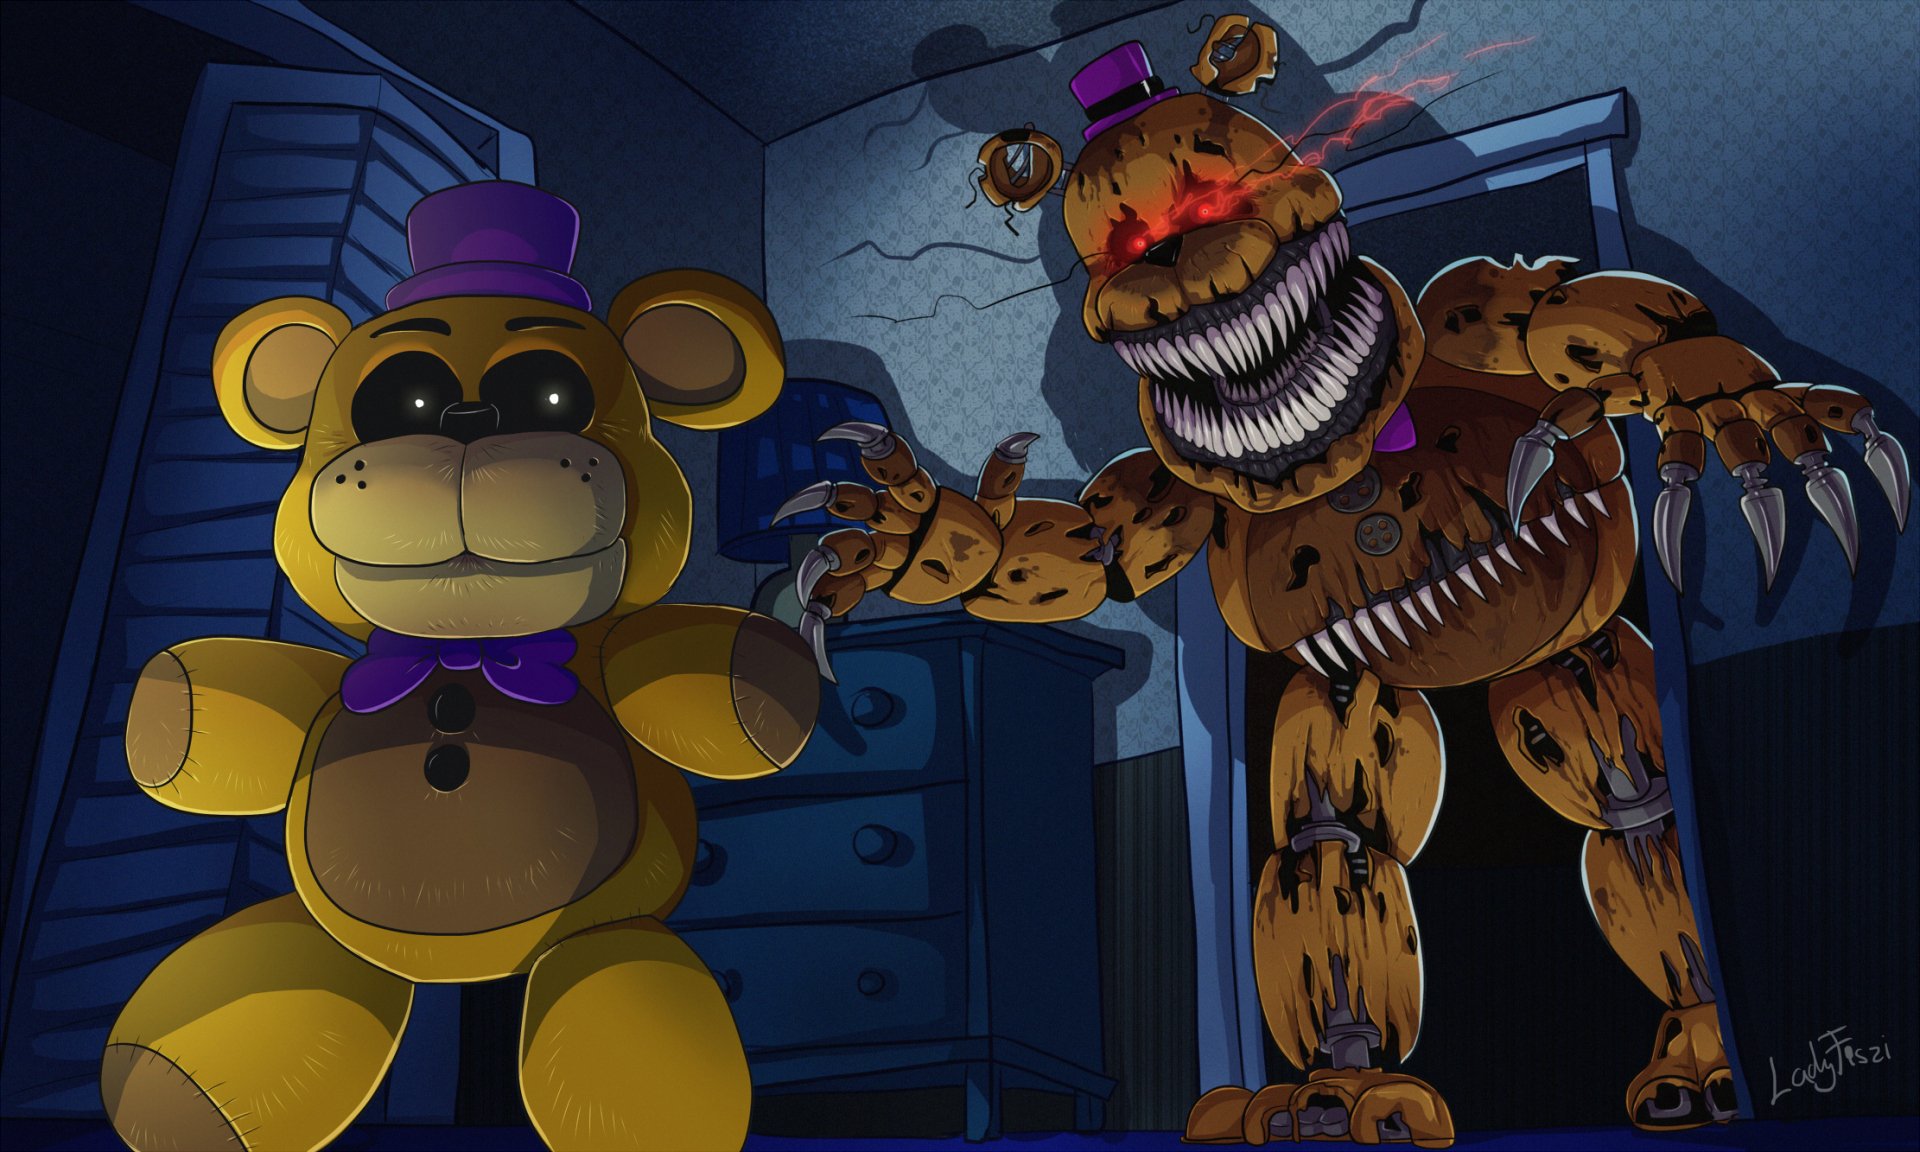 Nightmare Fredbear (Five Nights at Freddy’s) | Sticker